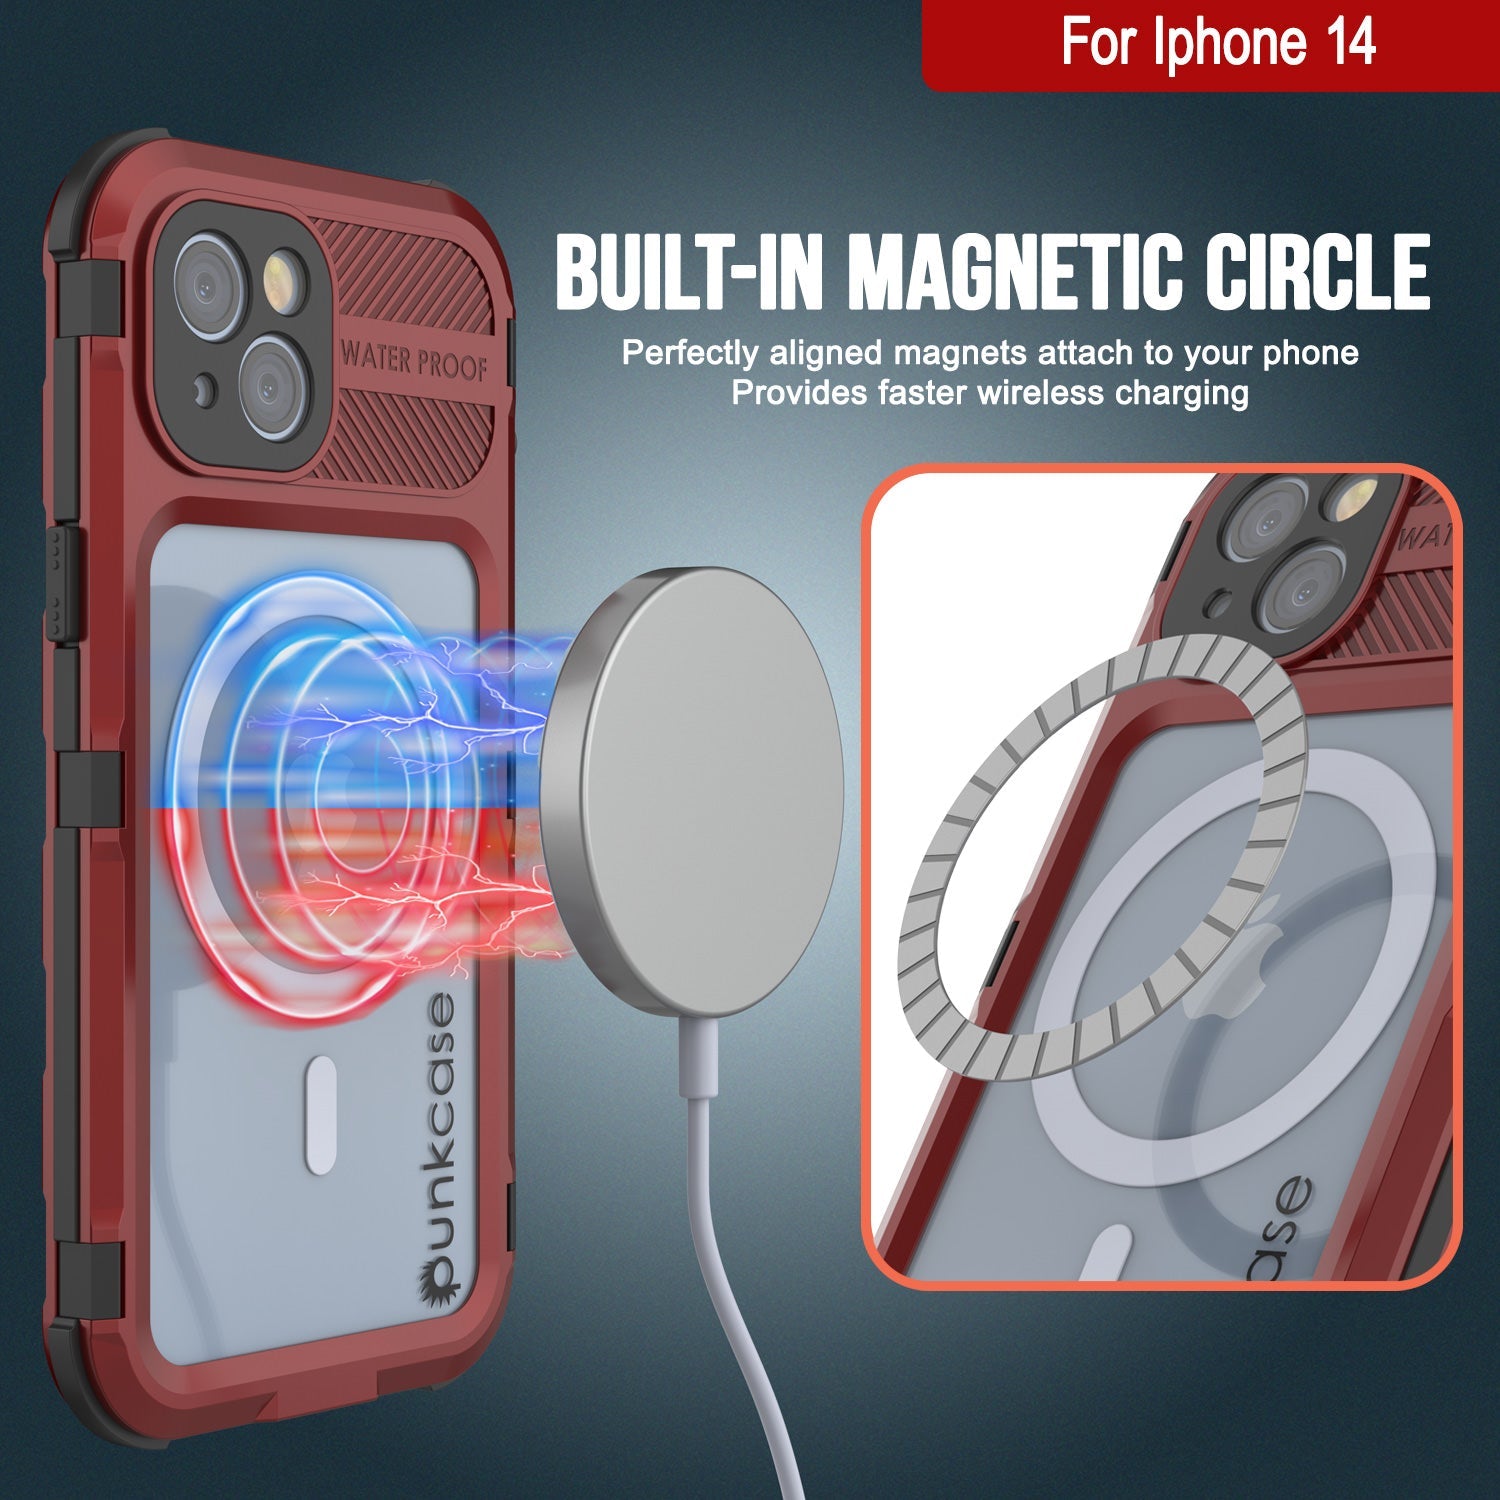 iPhone 14 Metal Extreme 2.0 Series Aluminum Waterproof Case IP68 W/Buillt in Screen Protector [Red-Black]